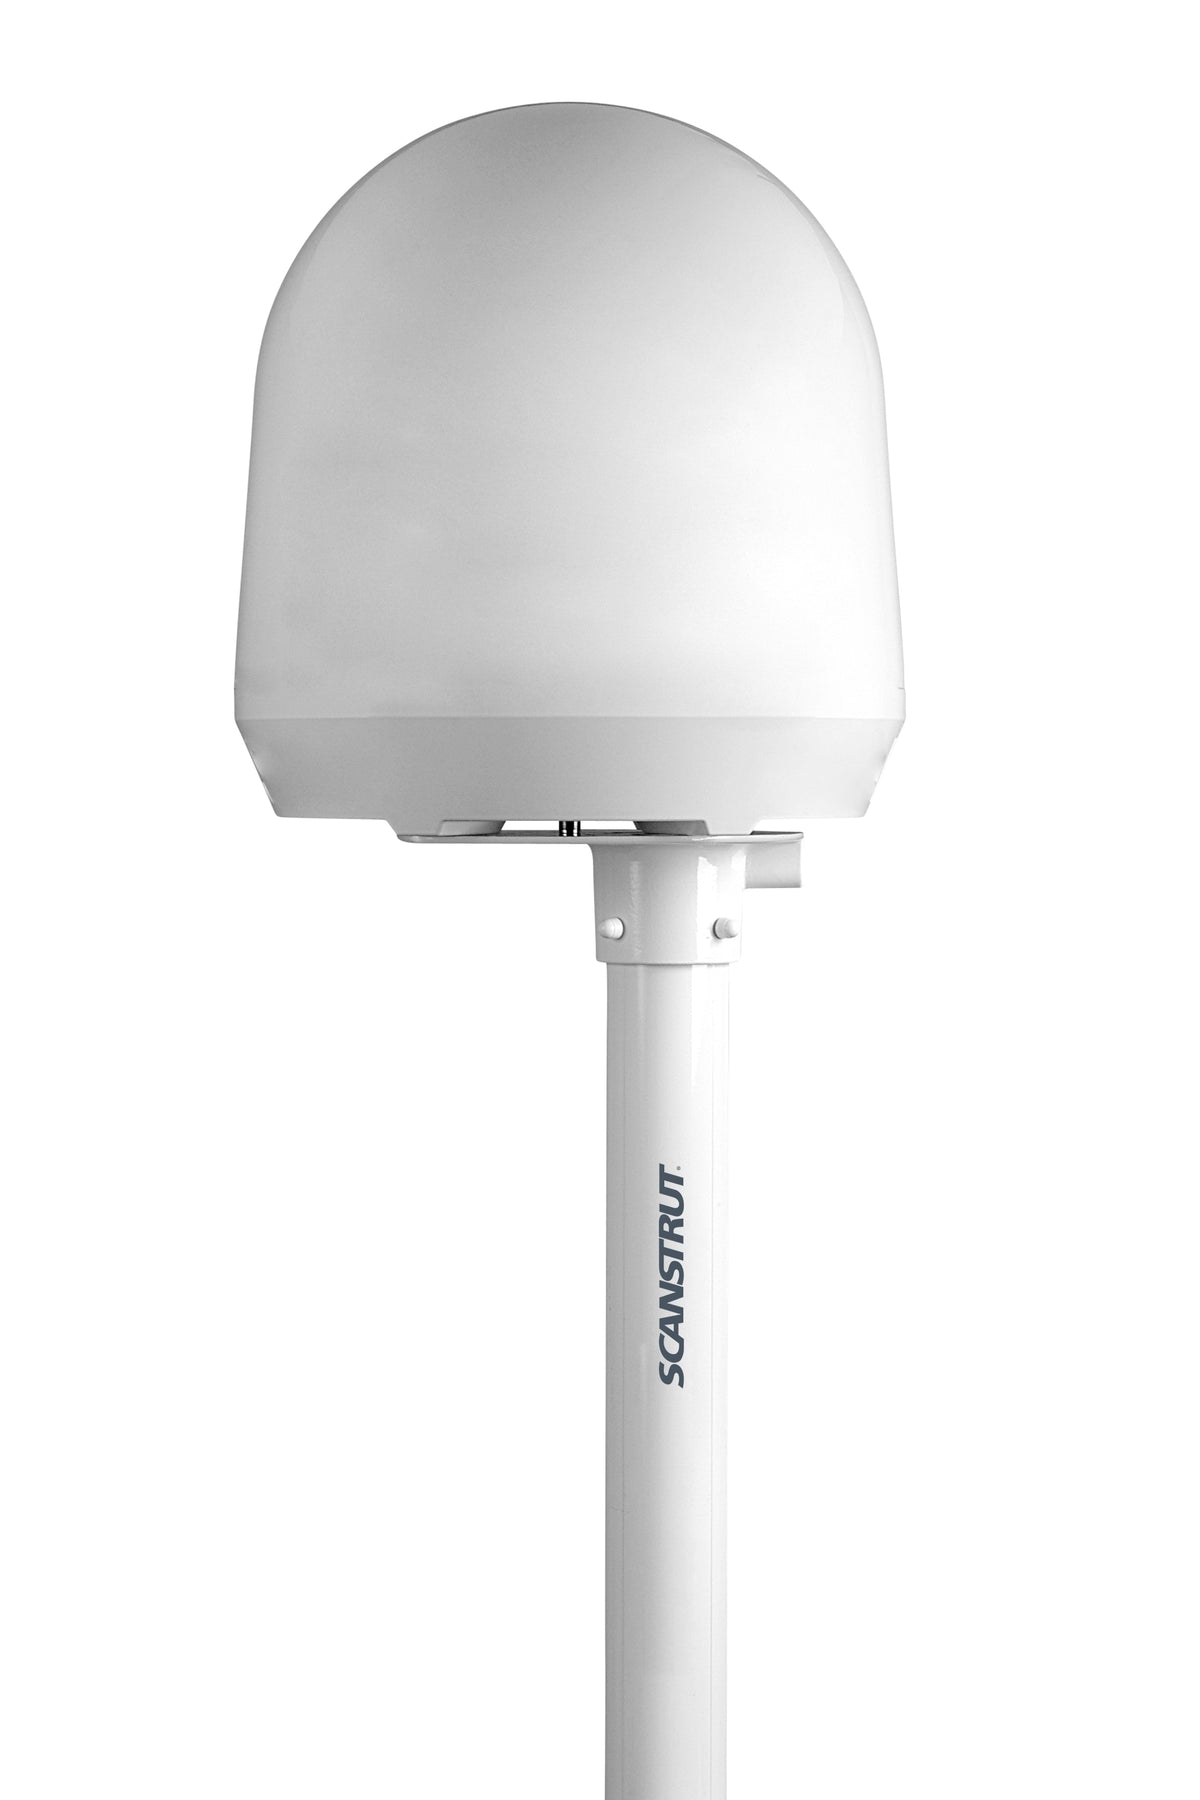 Scanstrut SC106-45R Satcom Pole Mount - 98" (2.5m), For Intellian, Raymarine Satcoms